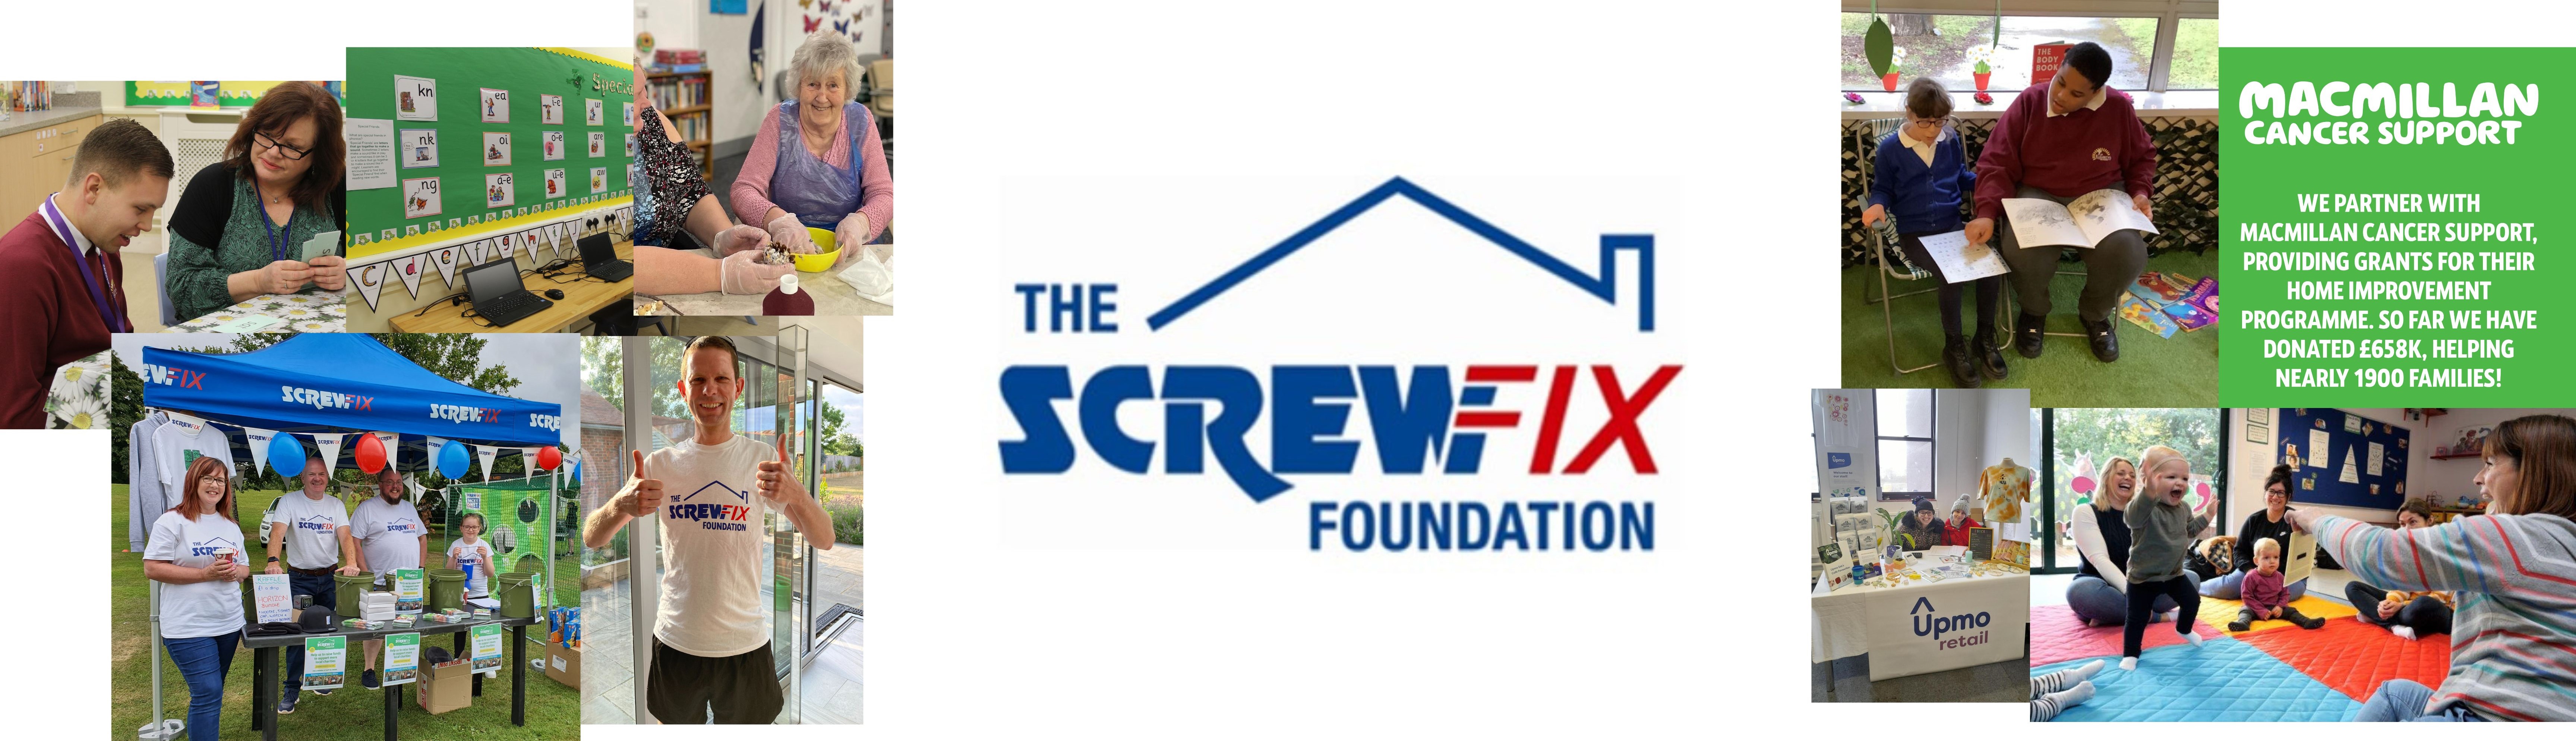 screwfix foundation